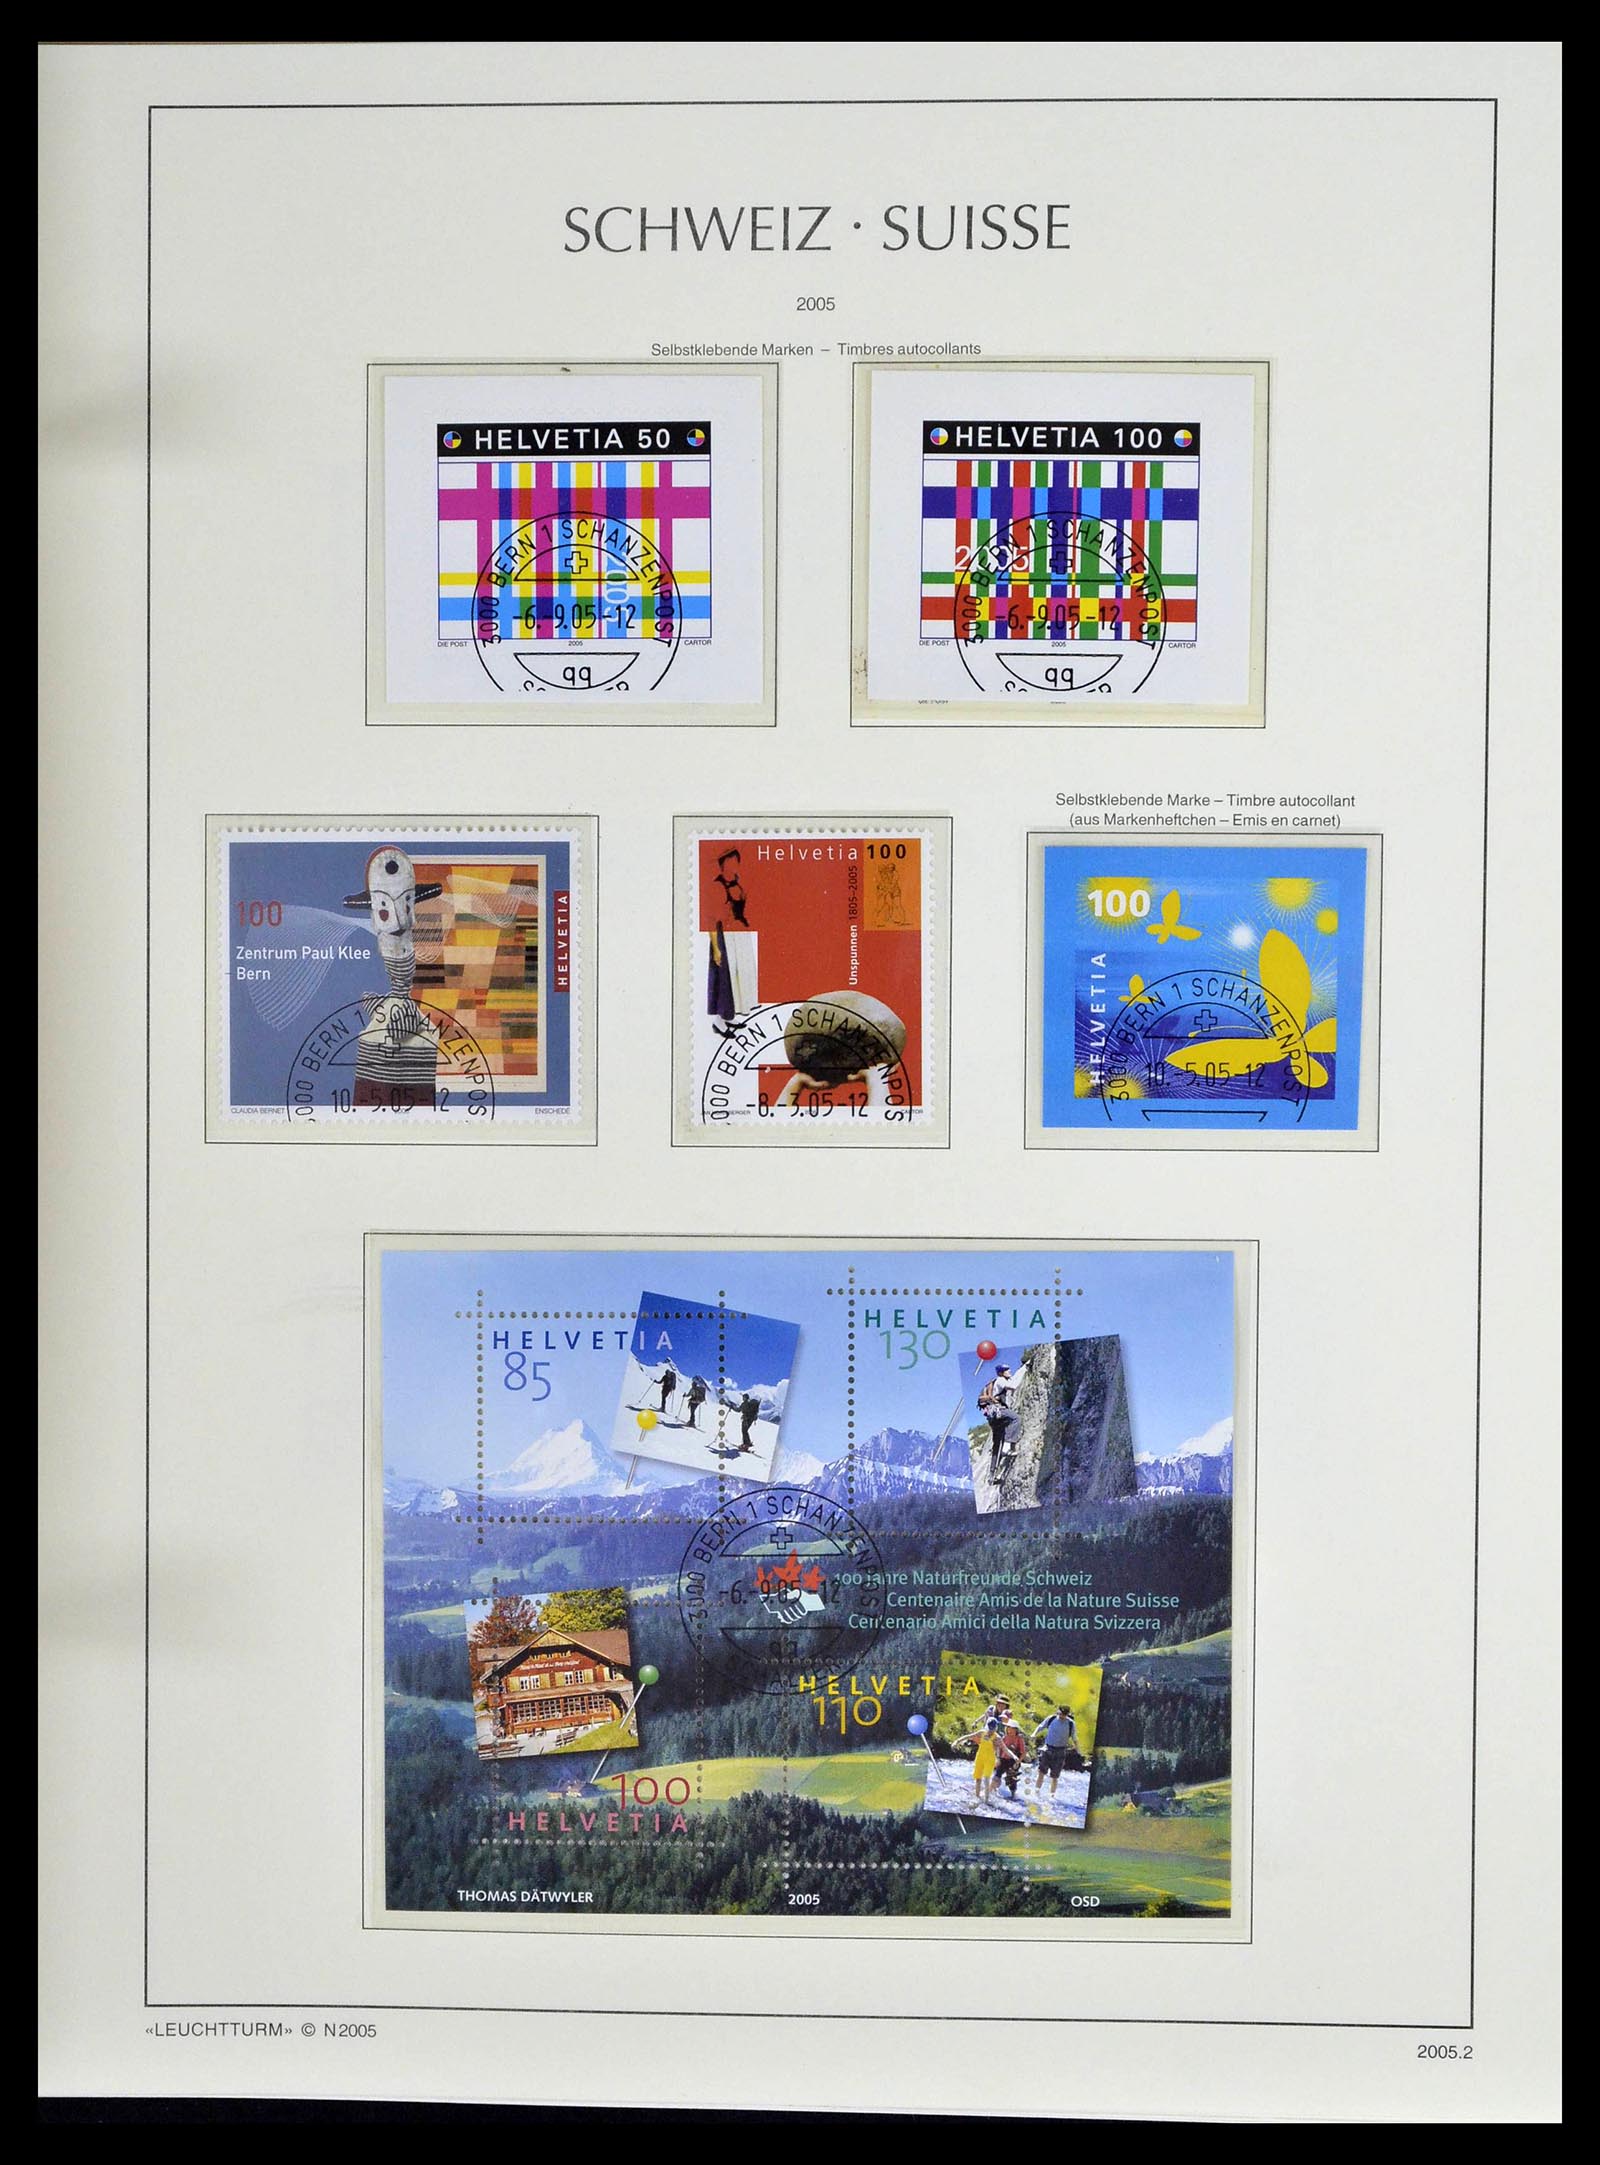 39094 0146 - Stamp collection 39094 Switzerland 1850-2005.